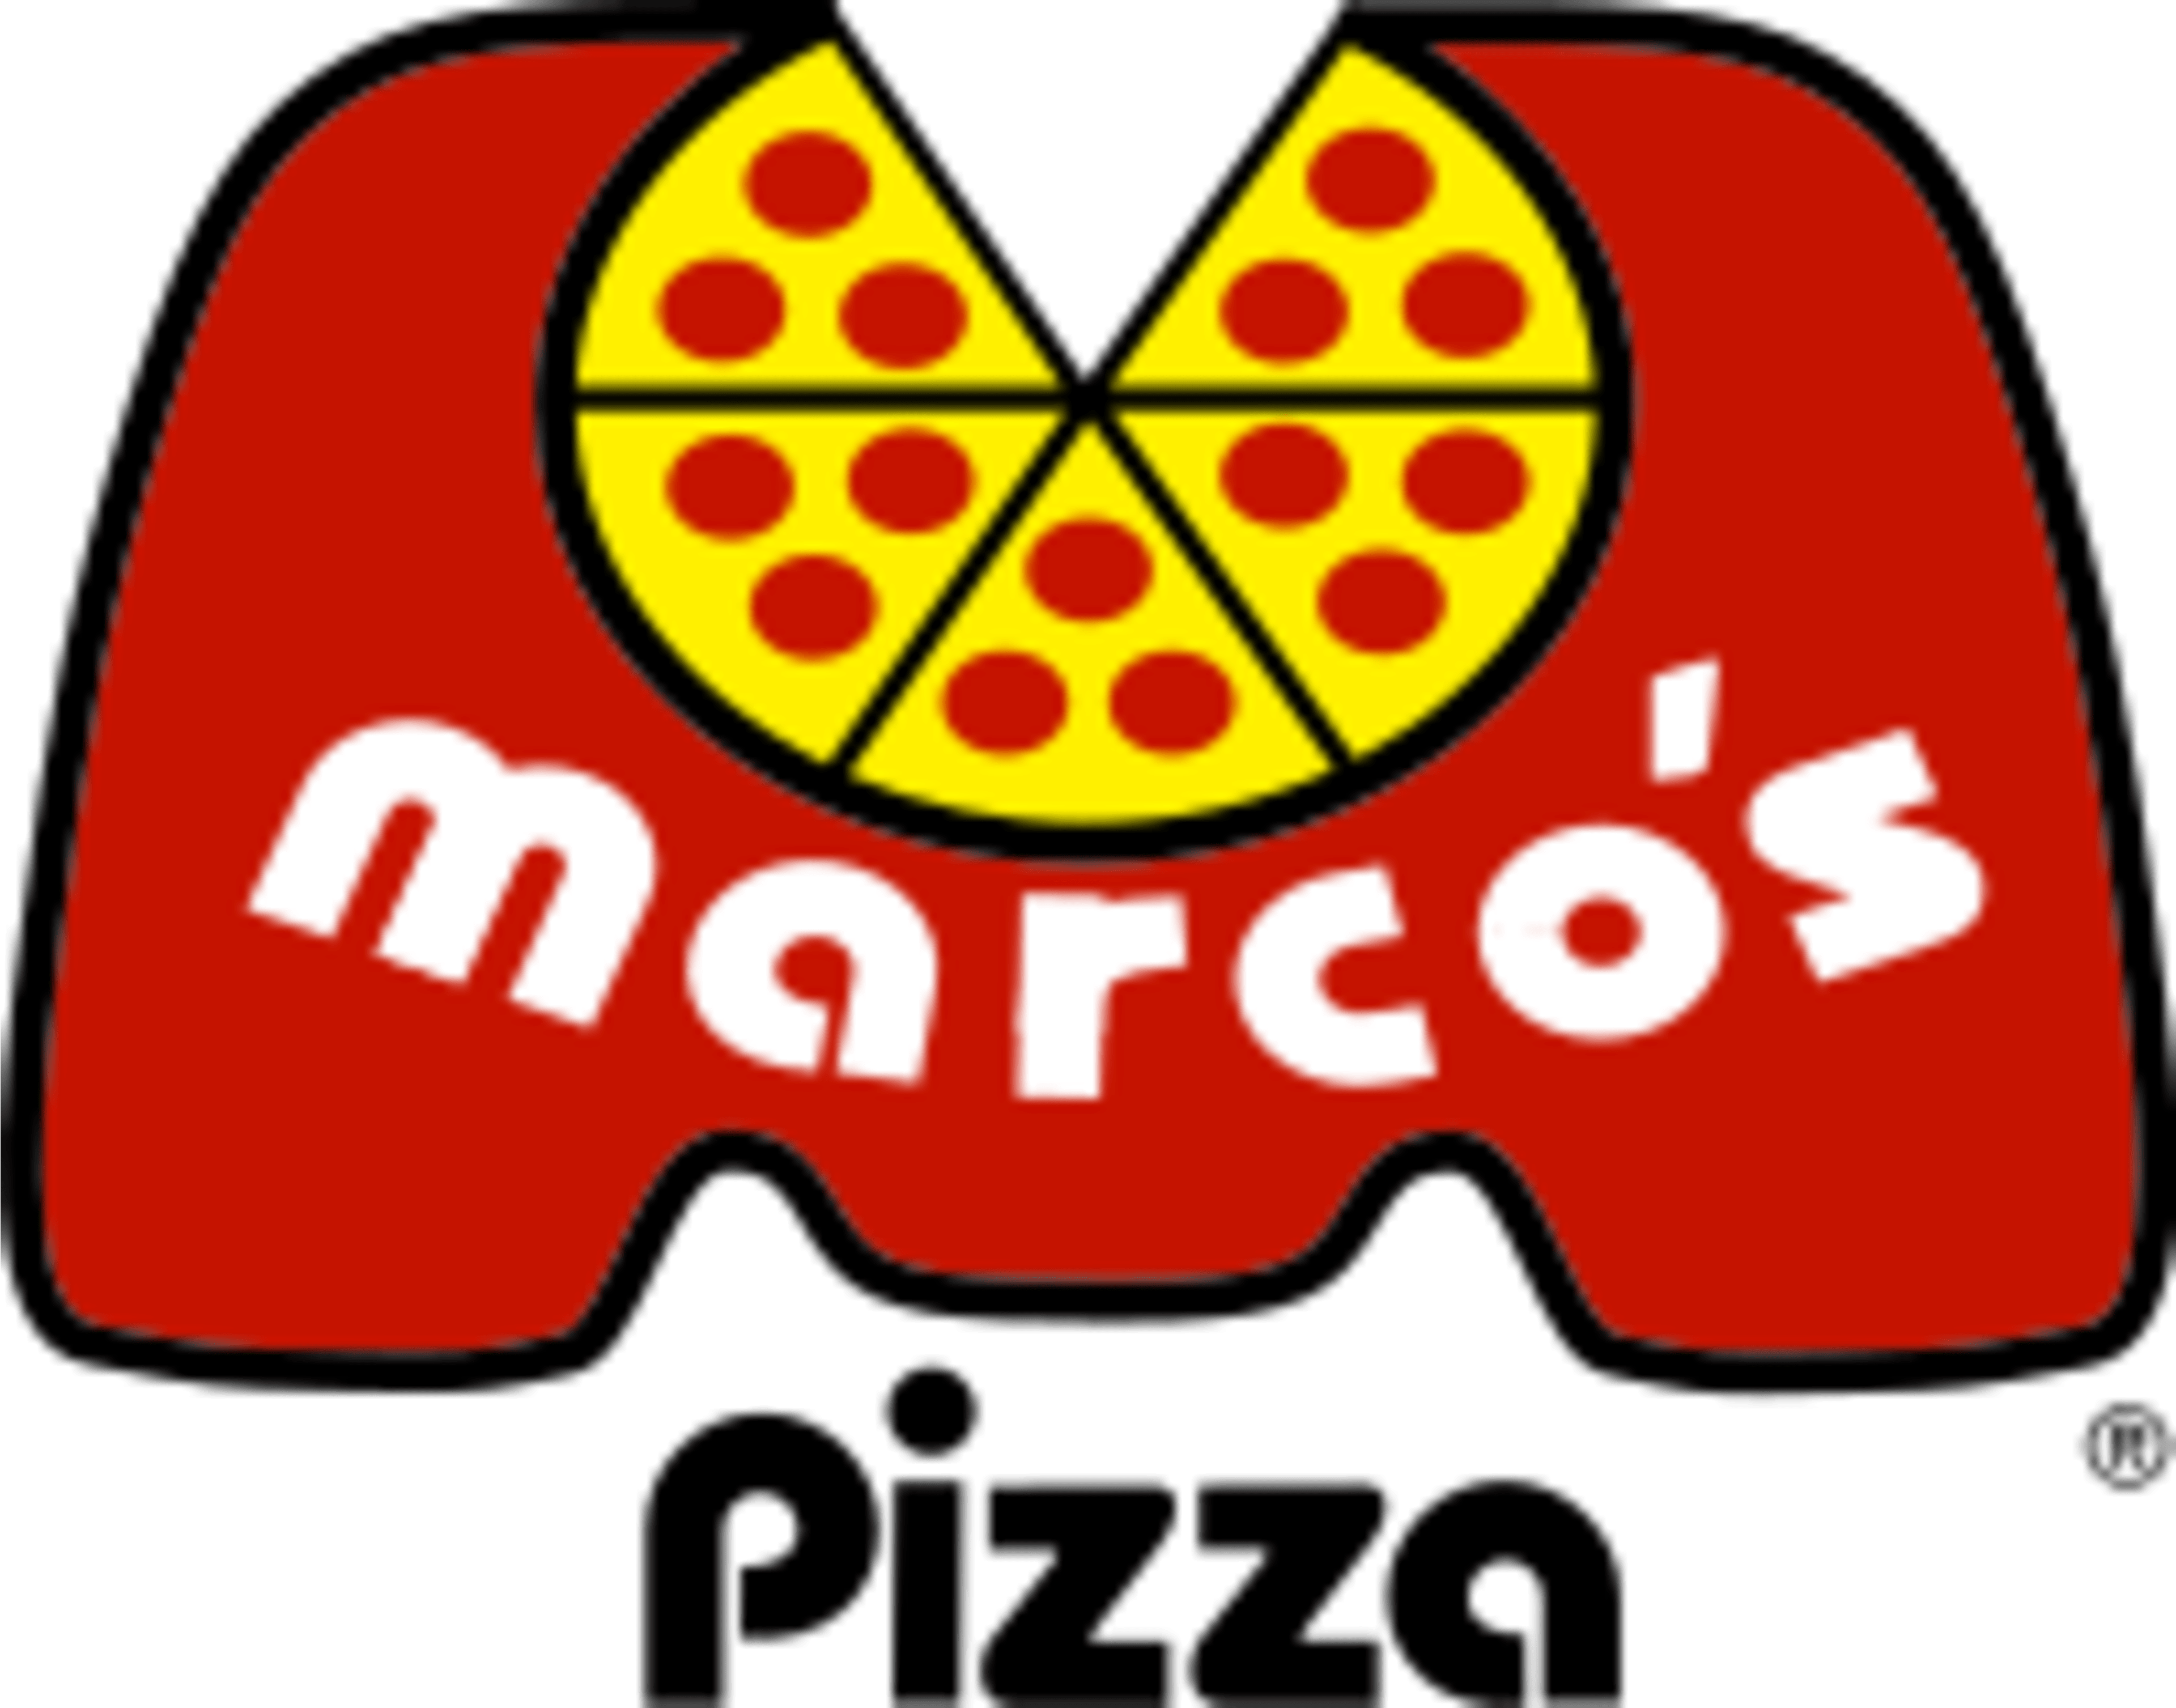 Marco's Pizza Code